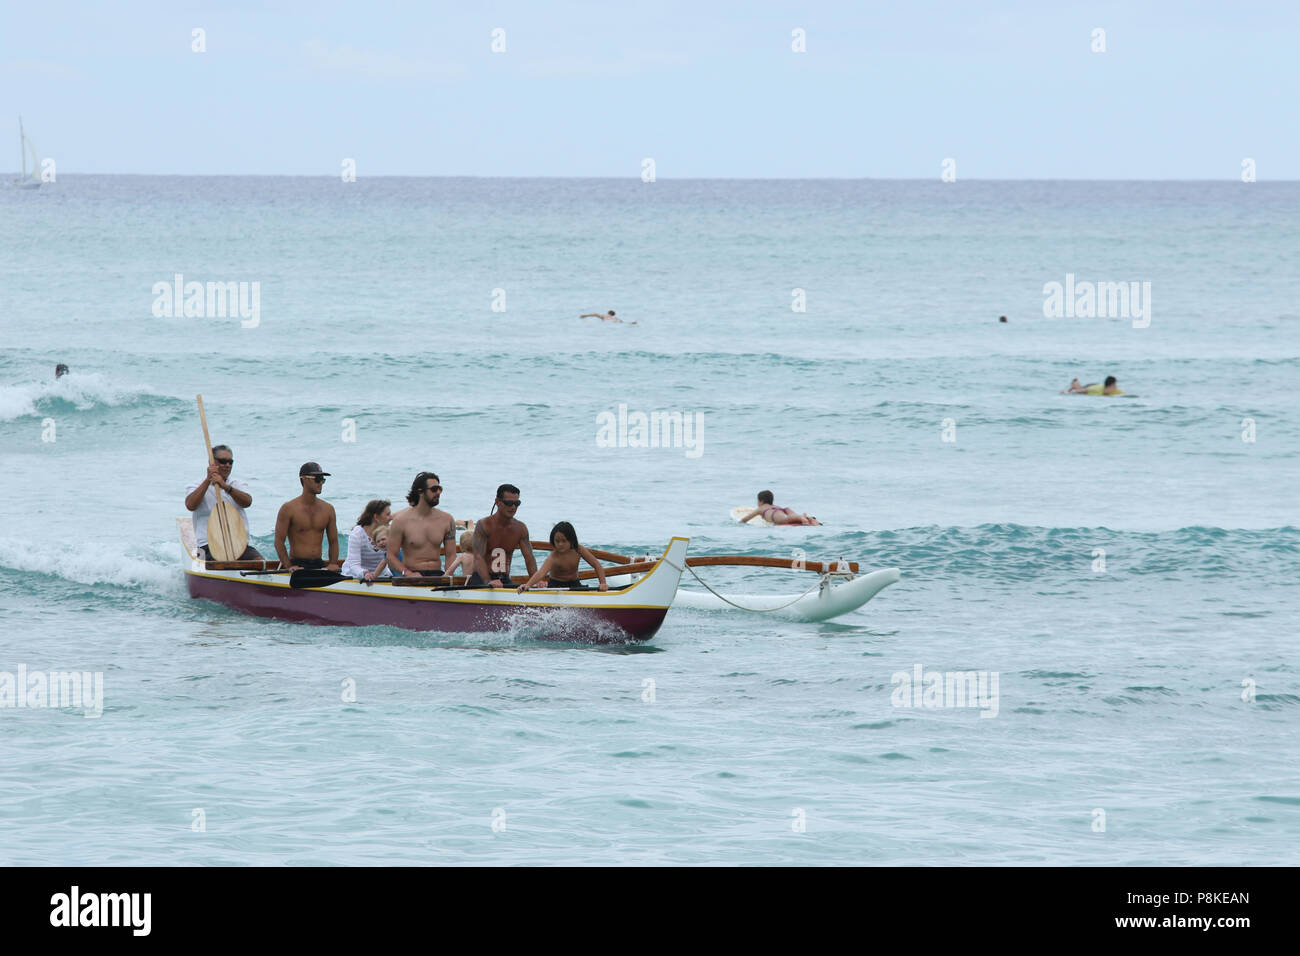 Canoe tourist rides. Surfers and people in the water are visible. Waikiki Beach, Waikiki, Honolulu, Oahu Island, Hawaii, USA. Stock Photo